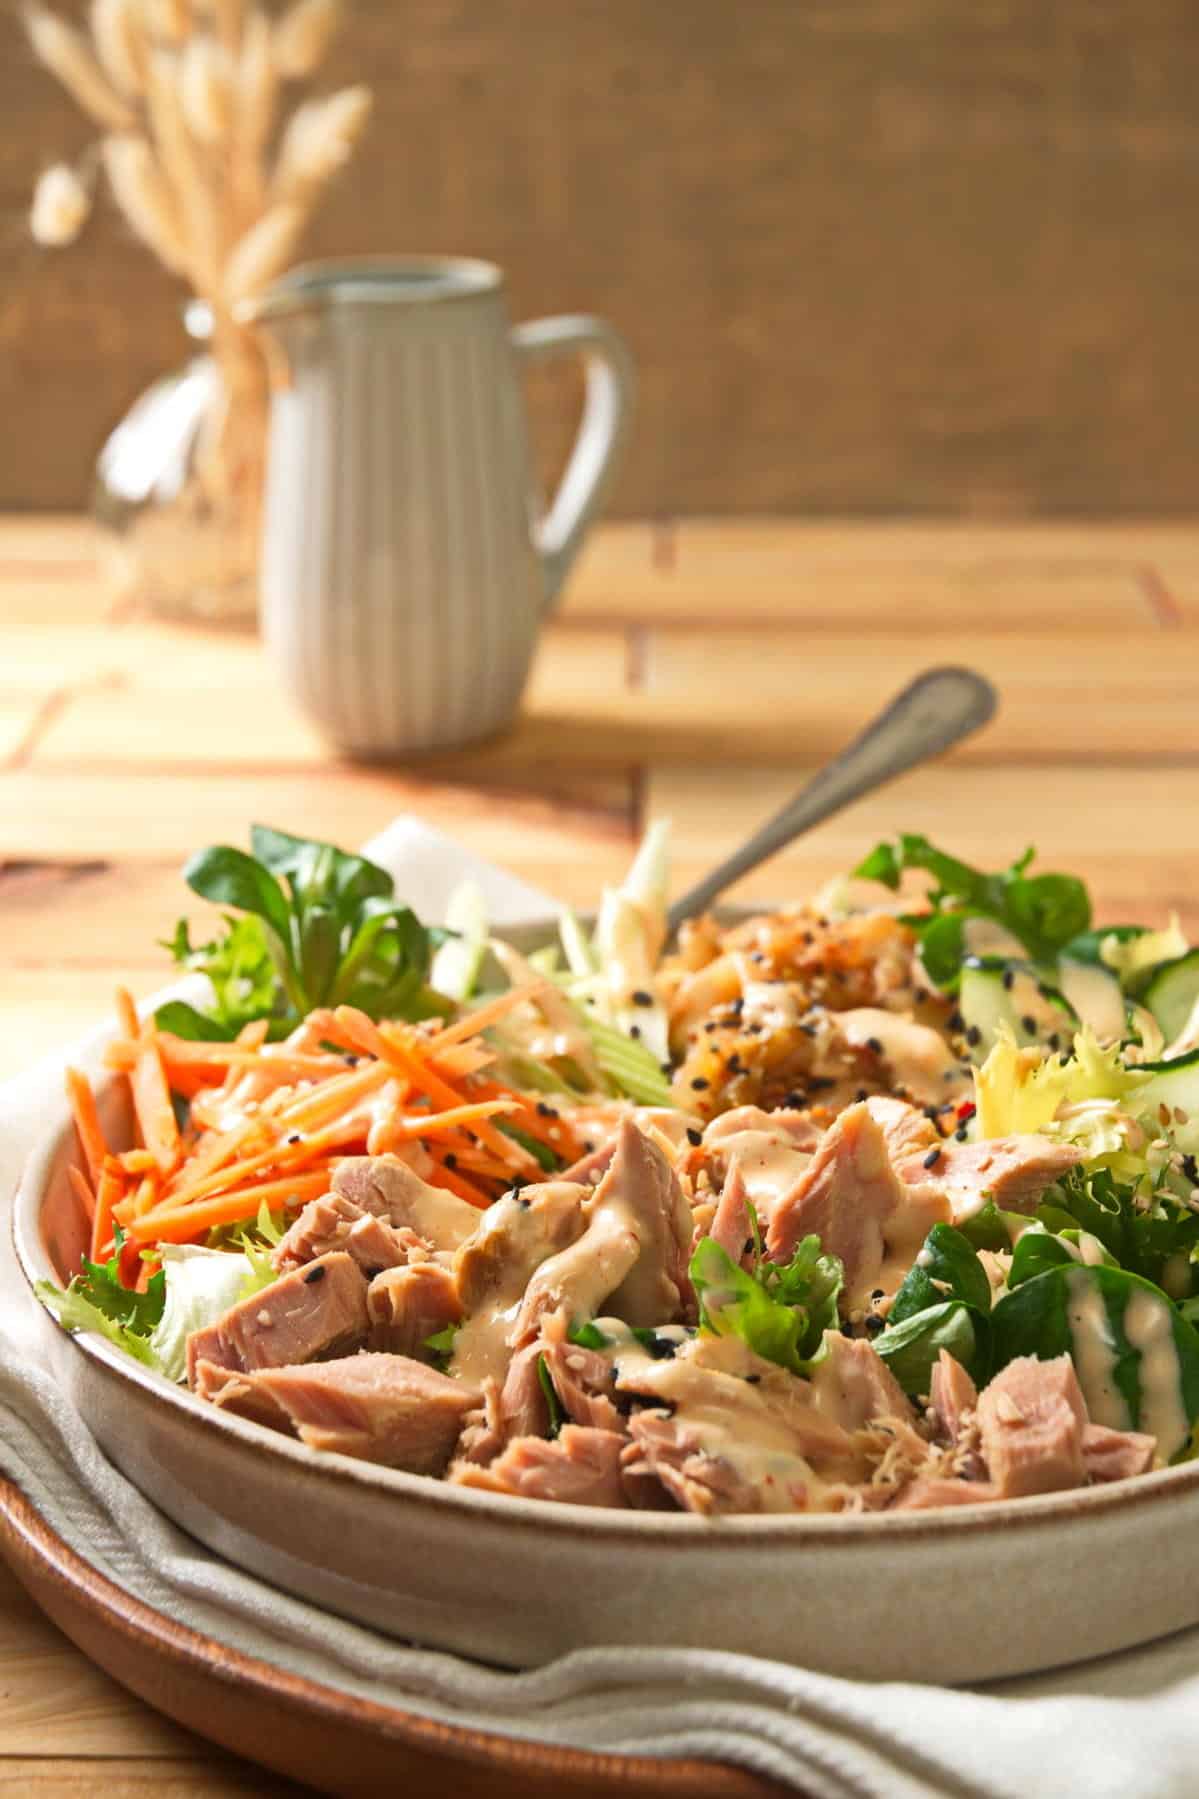 Kimchi tuna salad in bowl on wooden background.